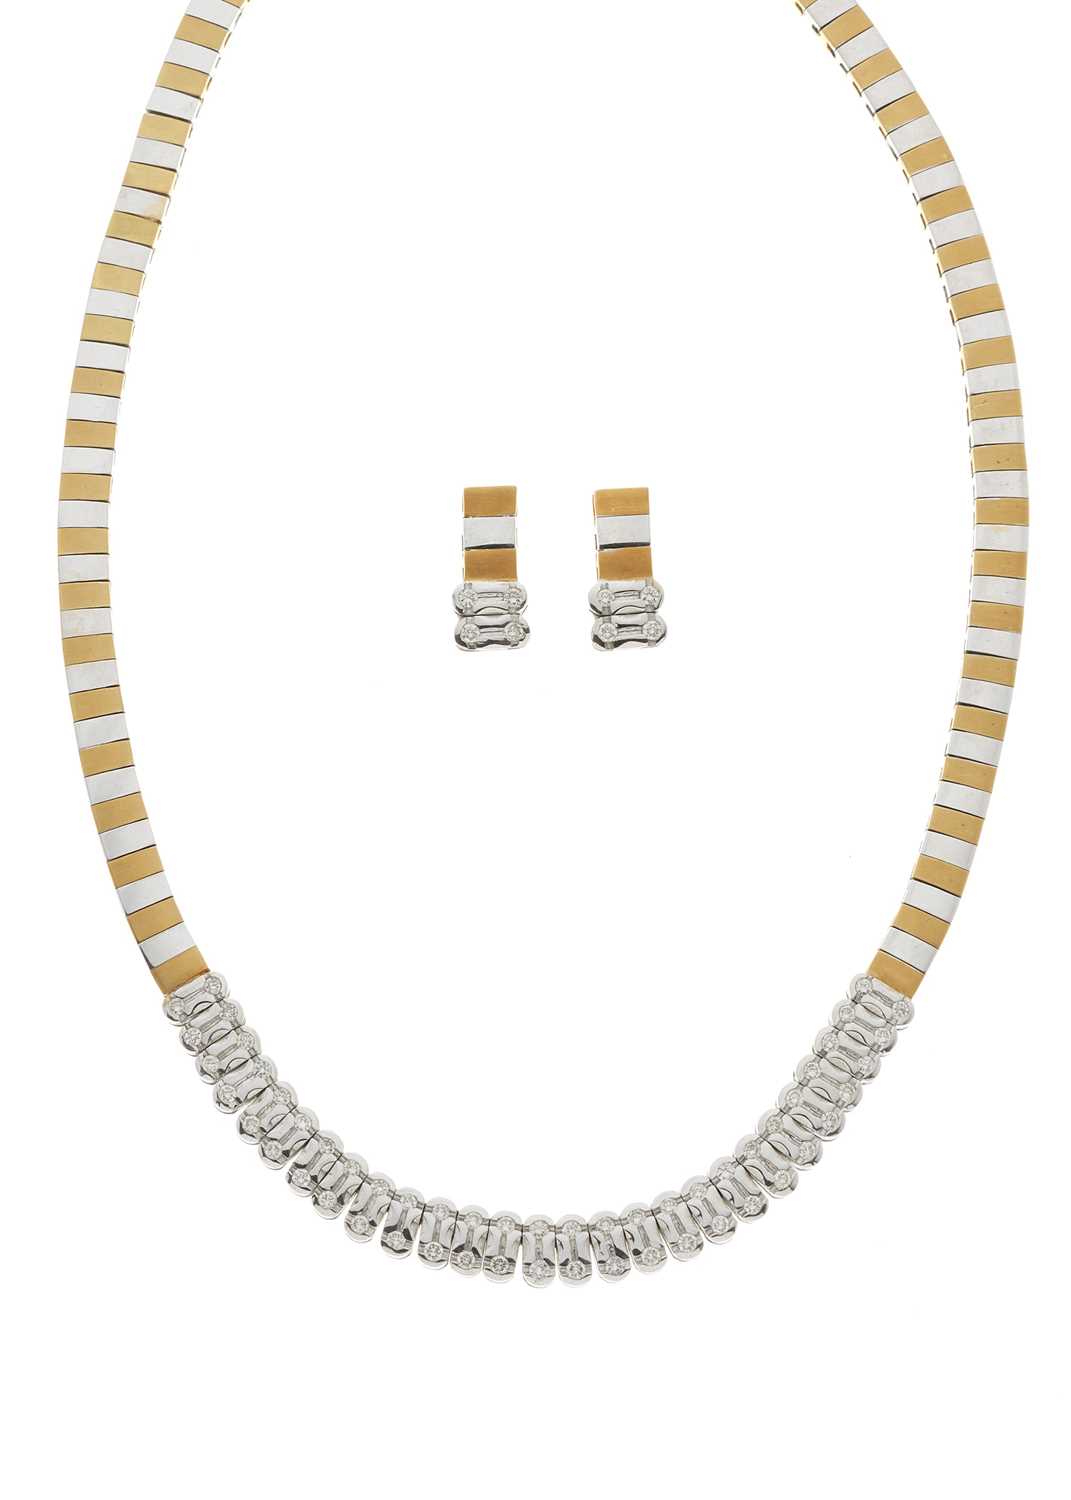 A set of 18ct bi-colour gold diamond jewellery